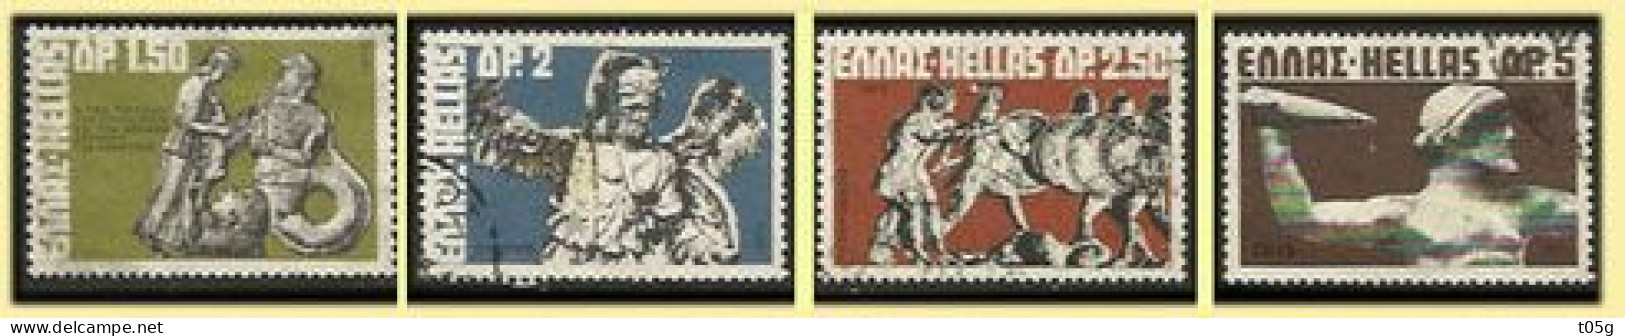 GREECE- GRECE  - HELLAS 1972: " Mythology A"  (complet Strips, Se-tenant 4 Stamps) Compl. Set Used - Usati